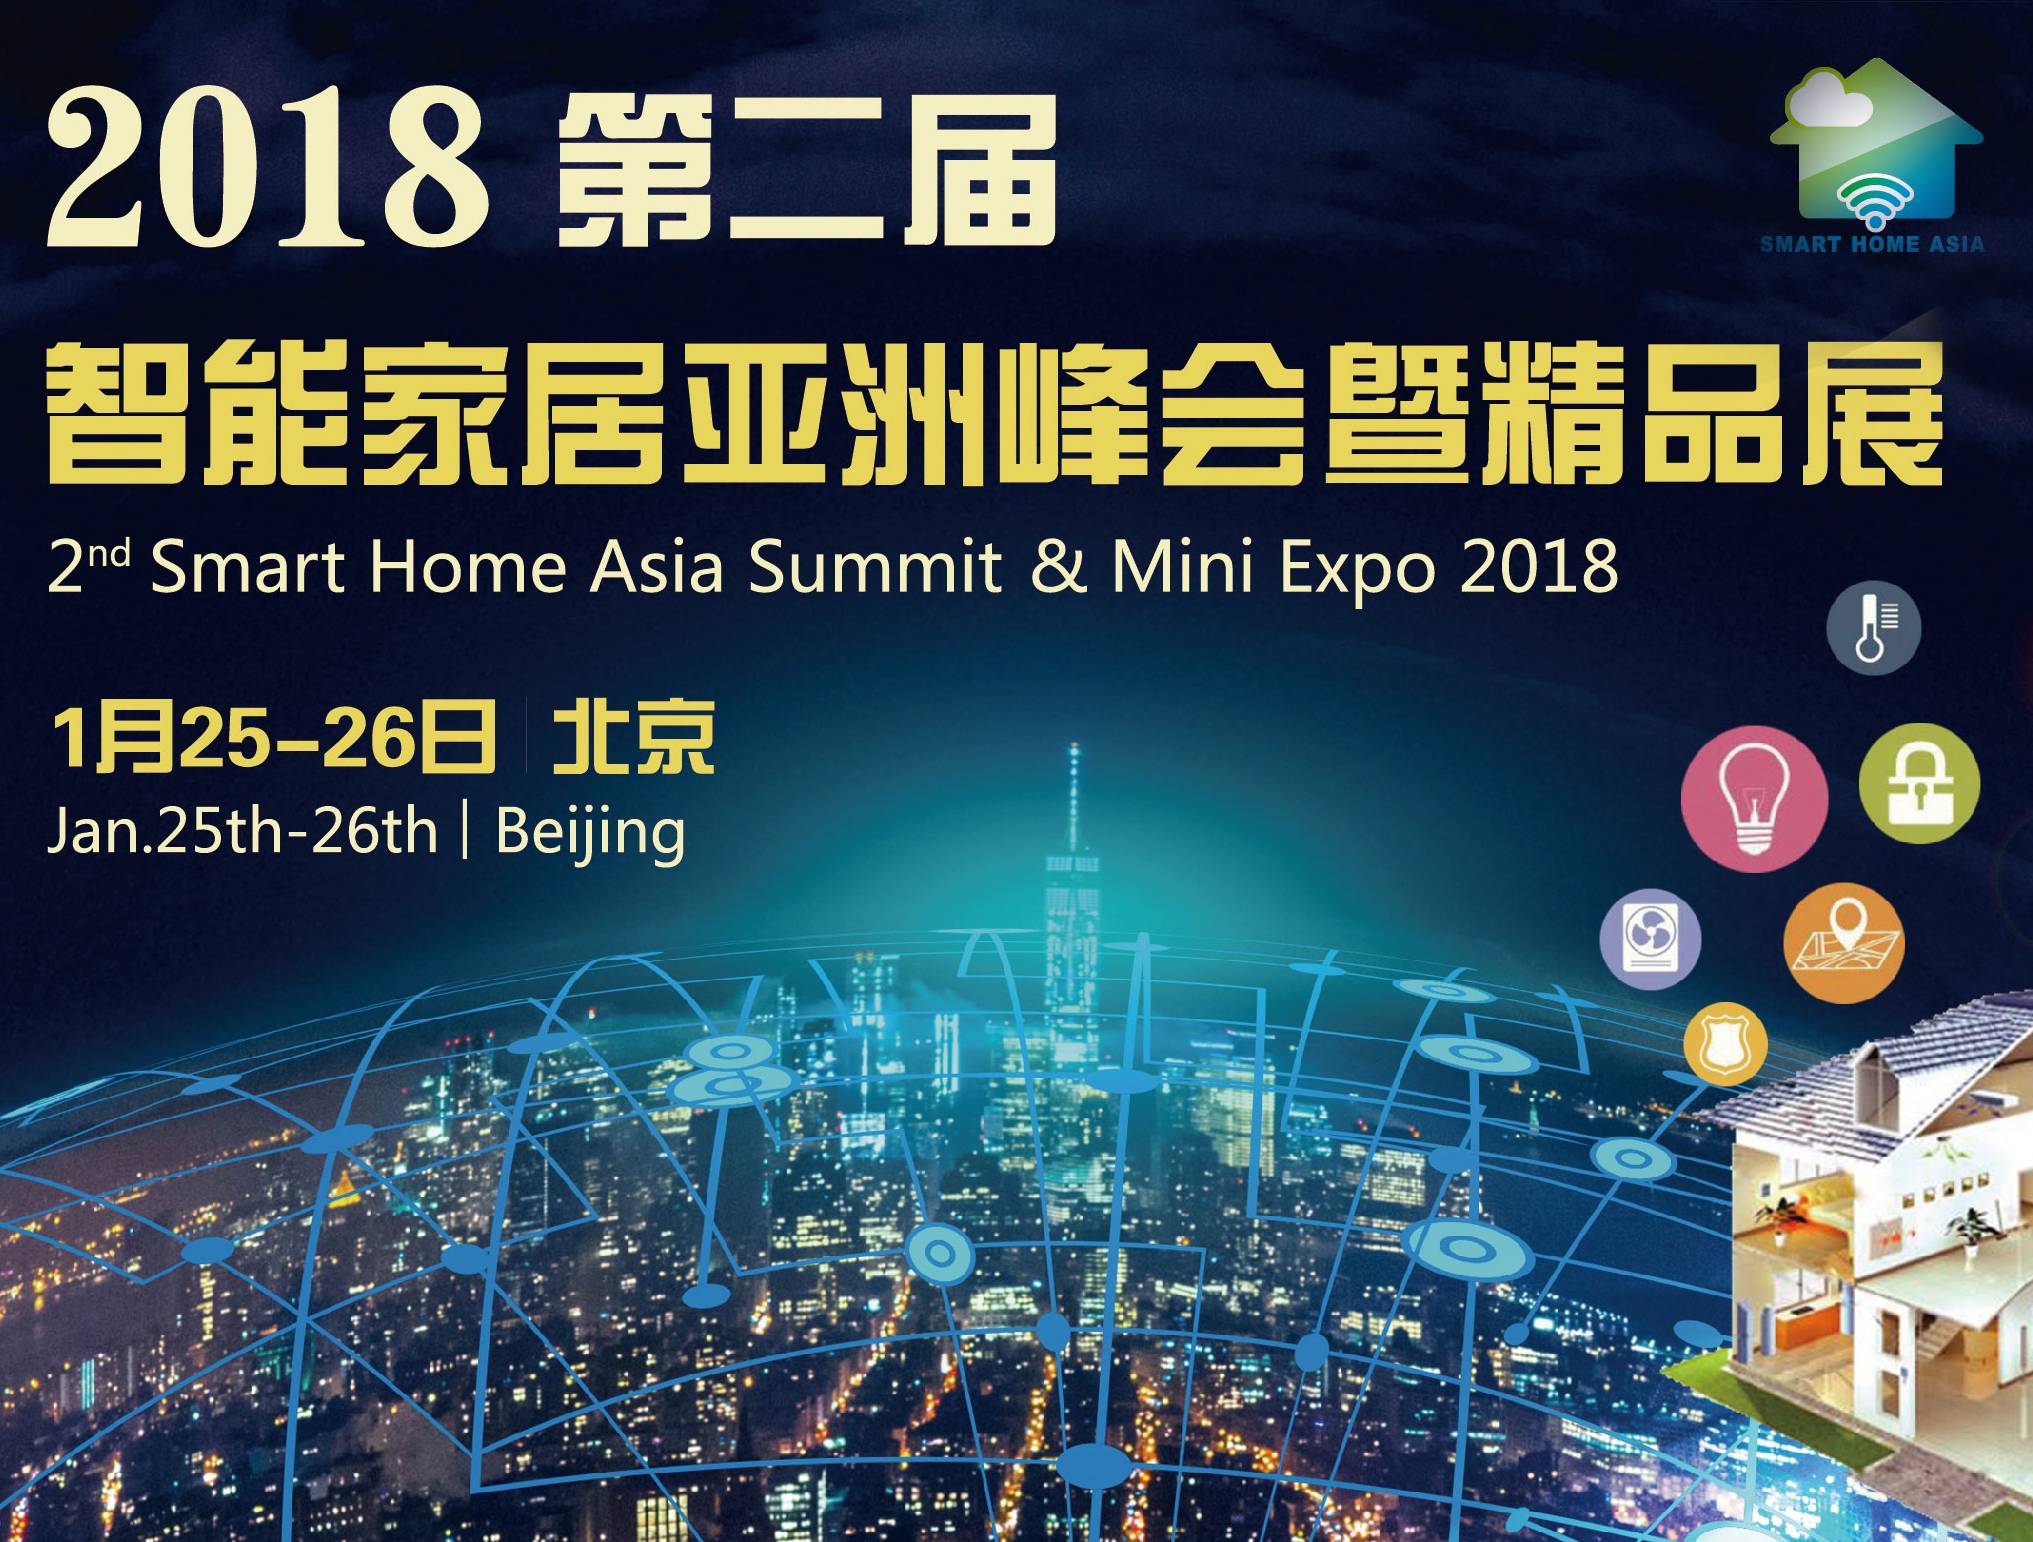 moore8活动海报-第二届智能家居亚洲峰会暨精品展-2018亚洲智能家居行业风向标